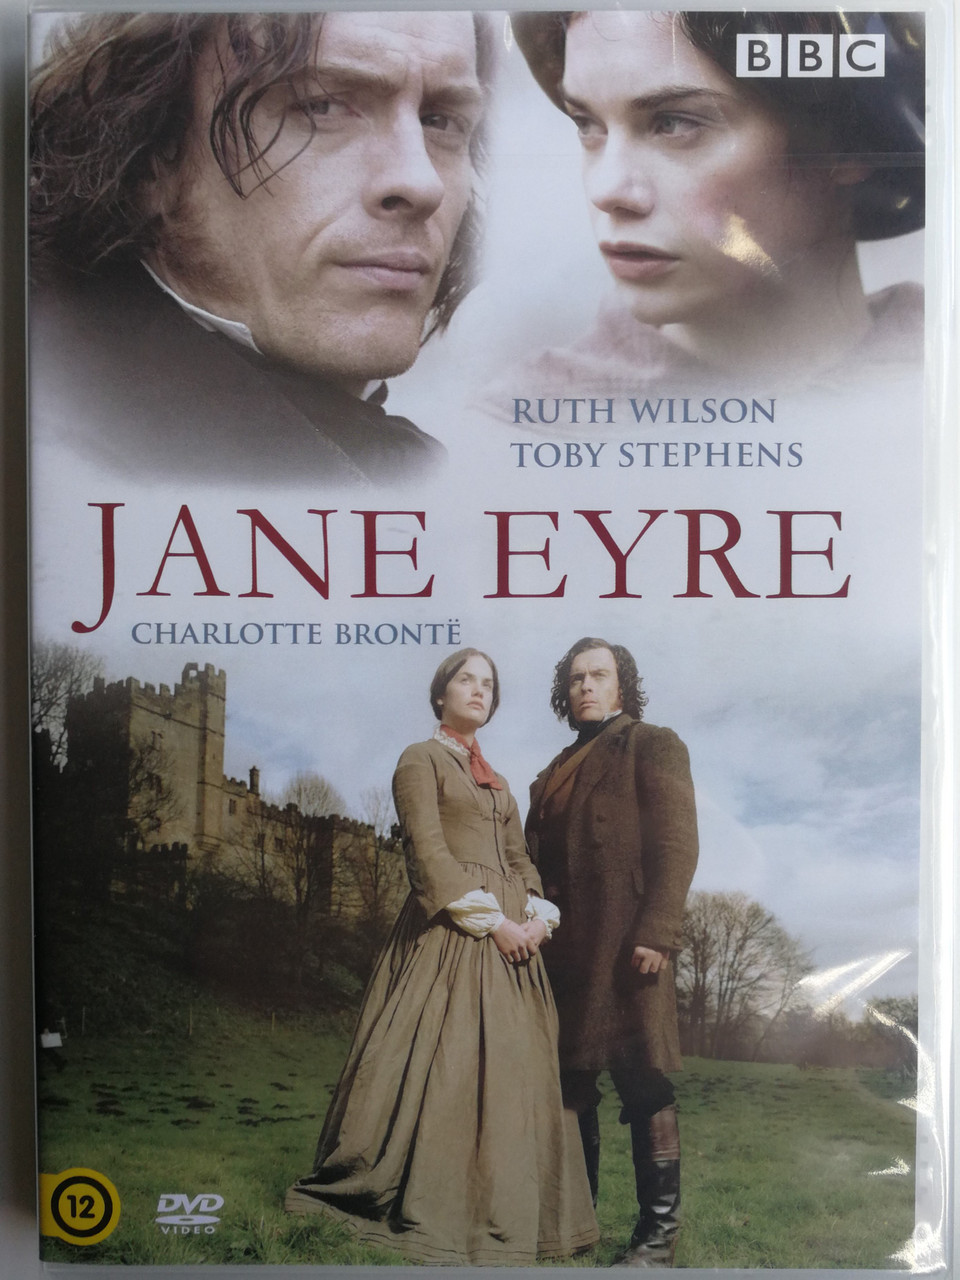 Jane Eyre DVD 2006 BBC TV Series / Directed by Susanna White / Starring:  Ruth Wilson, Toby Stephens, Cosima Littlewood, Georgie Henley -  bibleinmylanguage